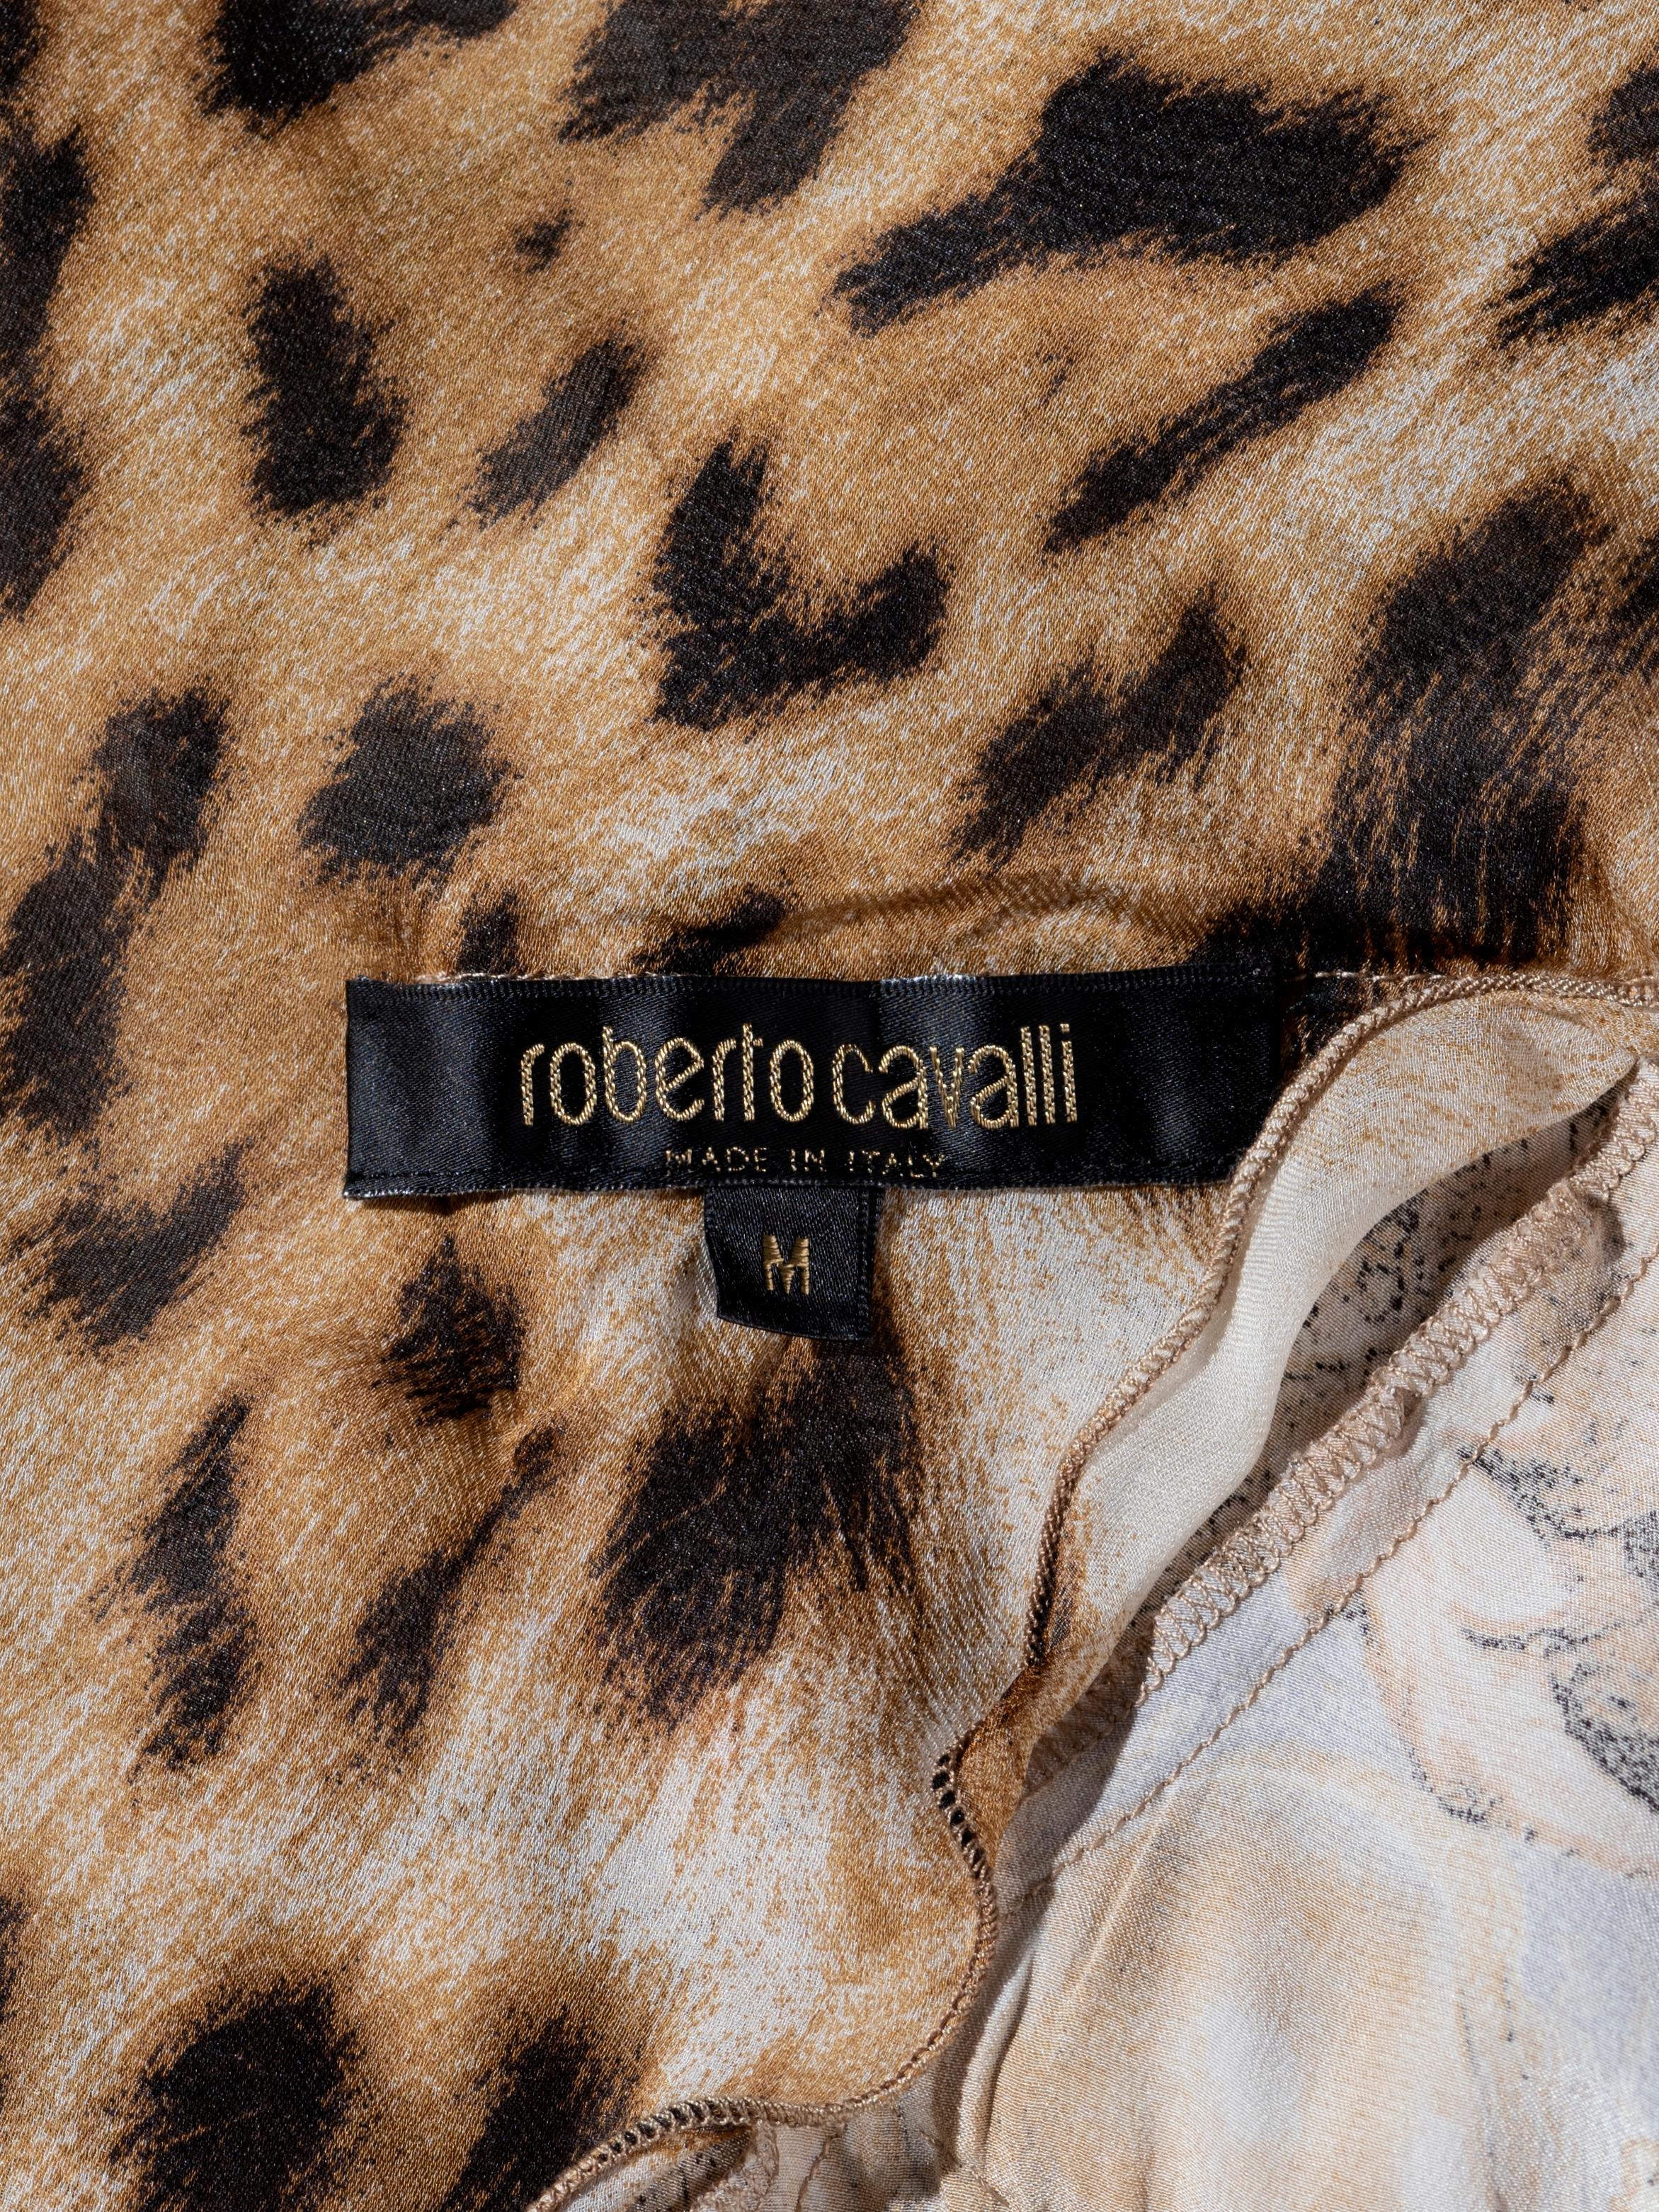 Roberto Cavalli gold baroque and leopard print silk evening dress, fw 2001 3